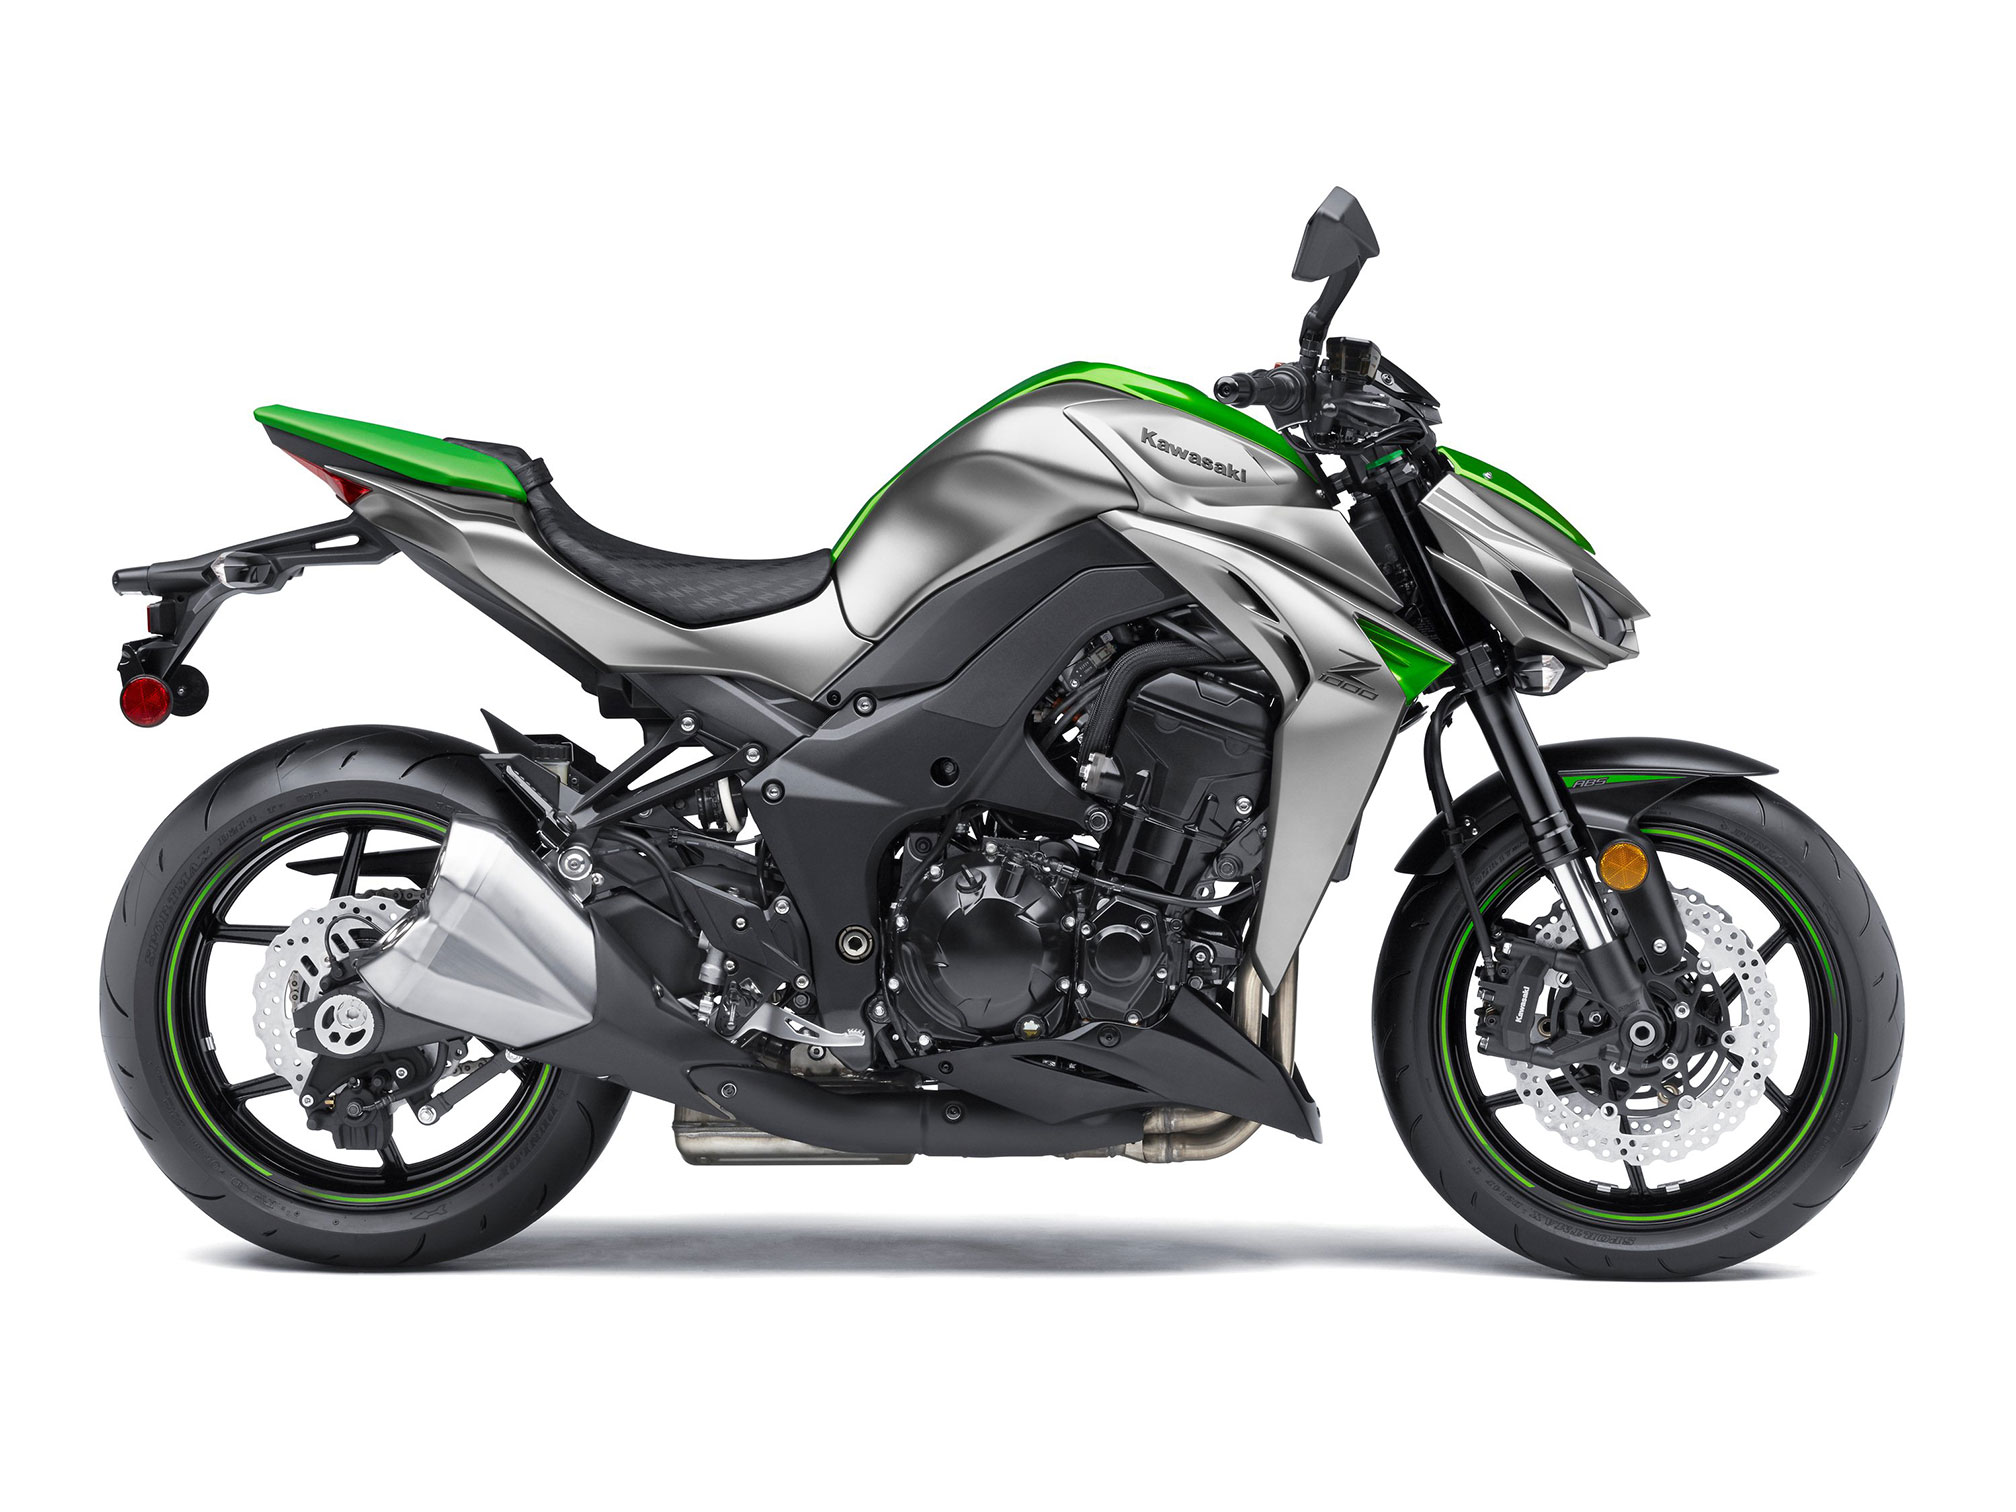 2016 Kawasaki Z1000 ABS Review